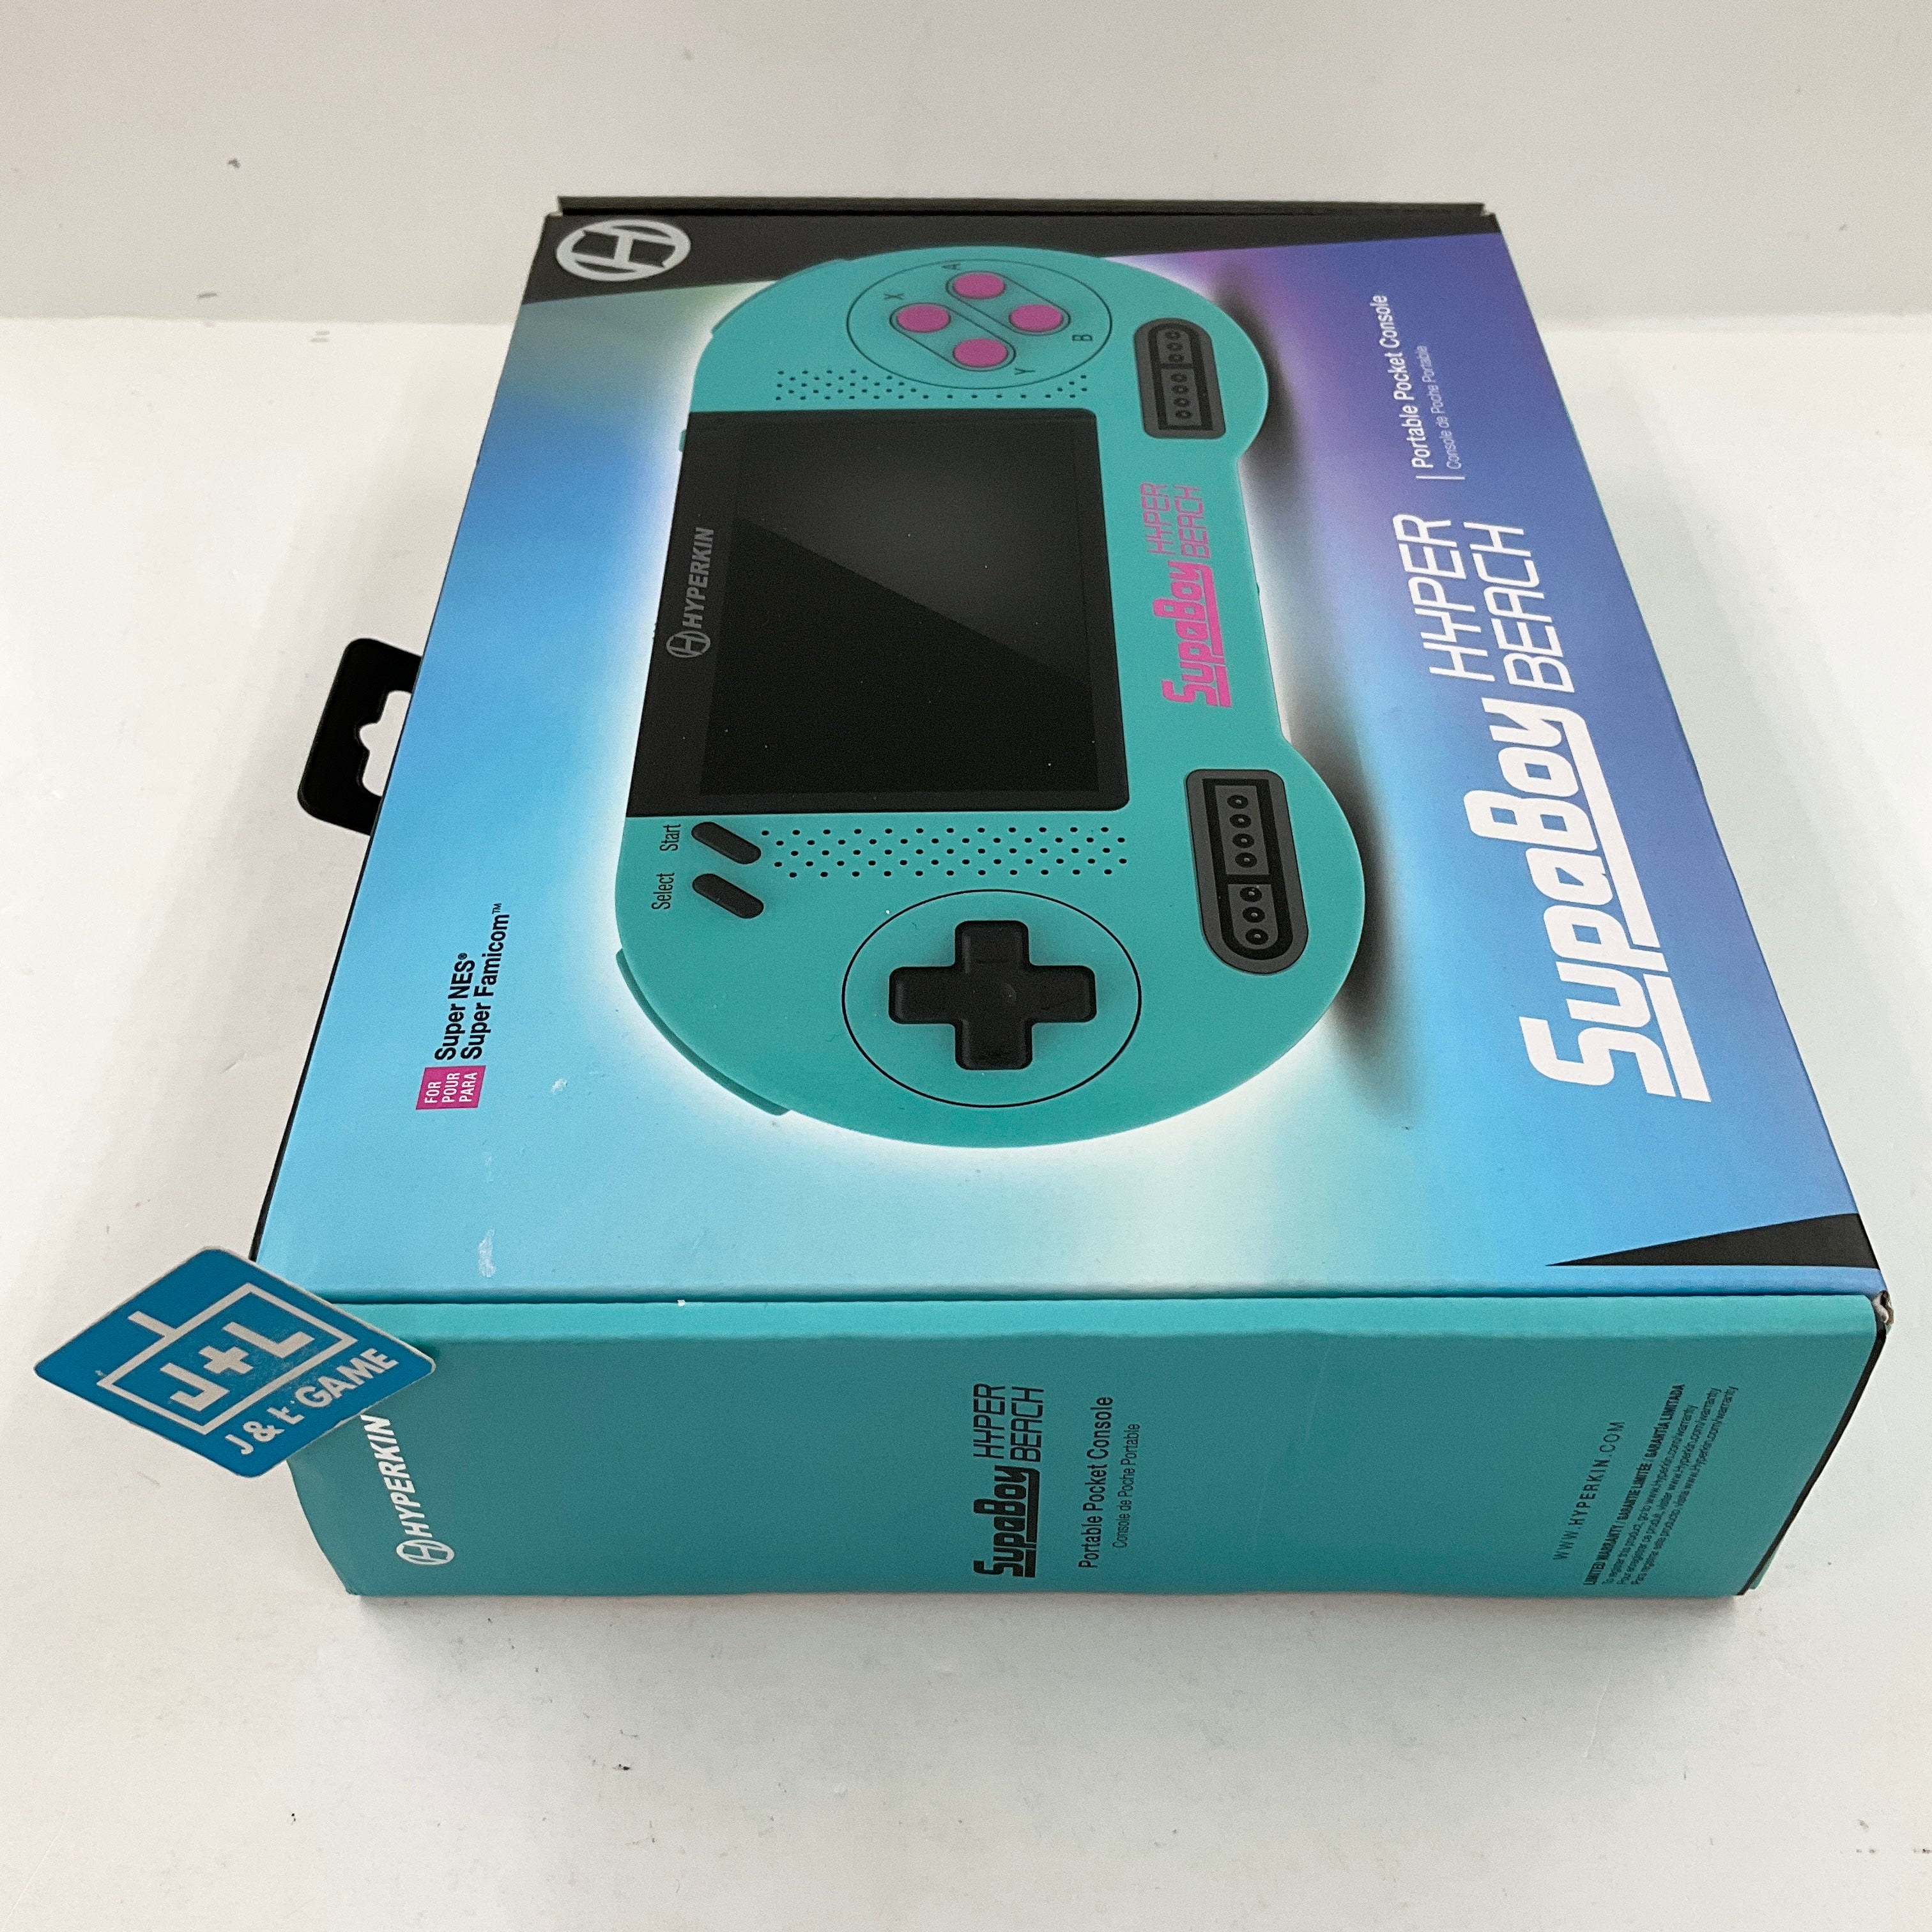 Hyperkin SupaBoy Portable Pocket Console (Hyper Beach) - (SNES) Super Nintendo CONSOLE Hyperkin   